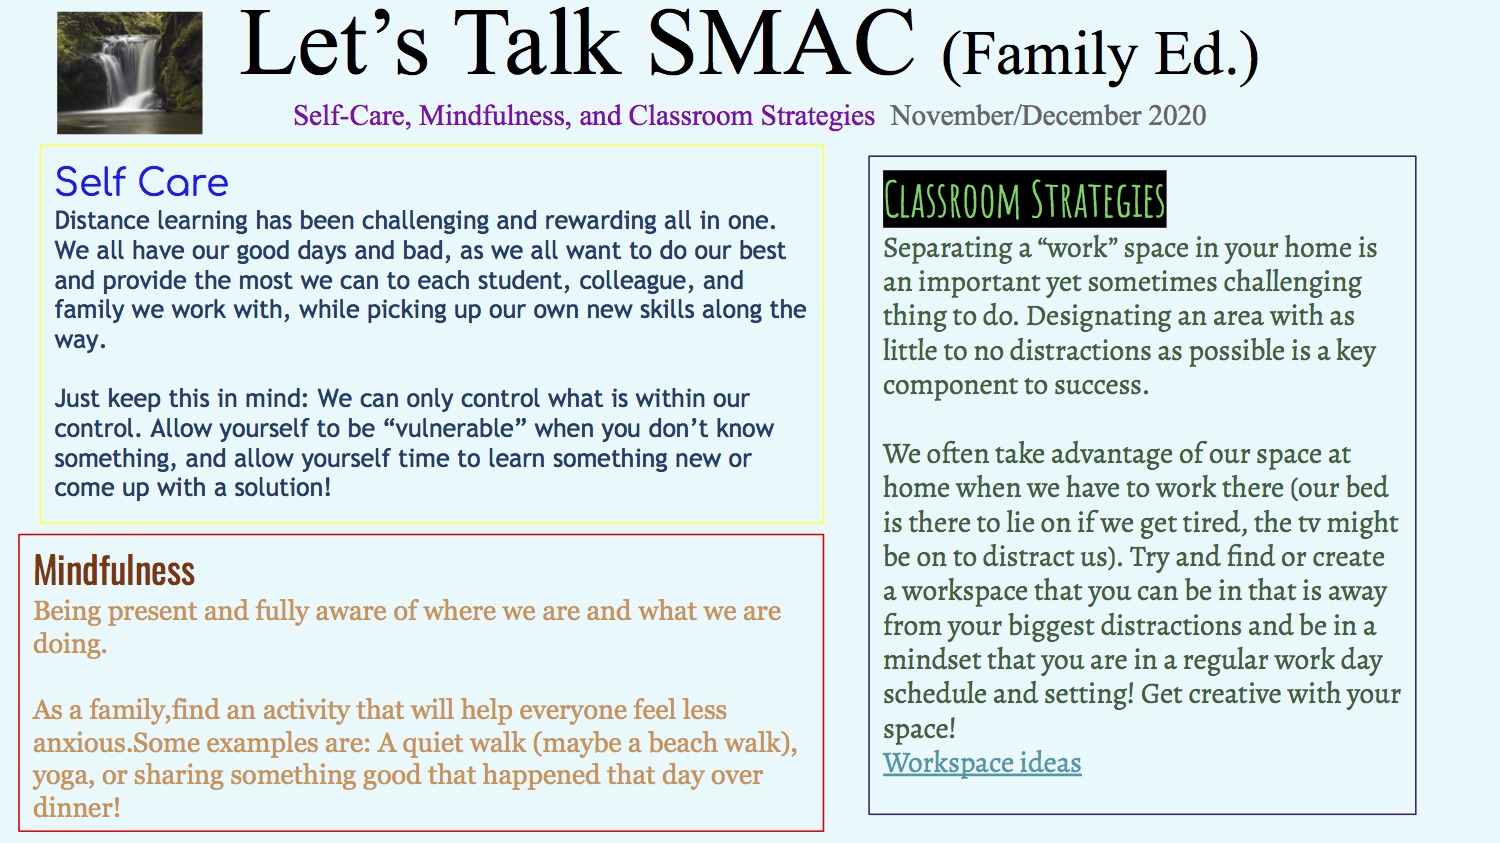 Let’s Talk SMAC Family Nov-Dec